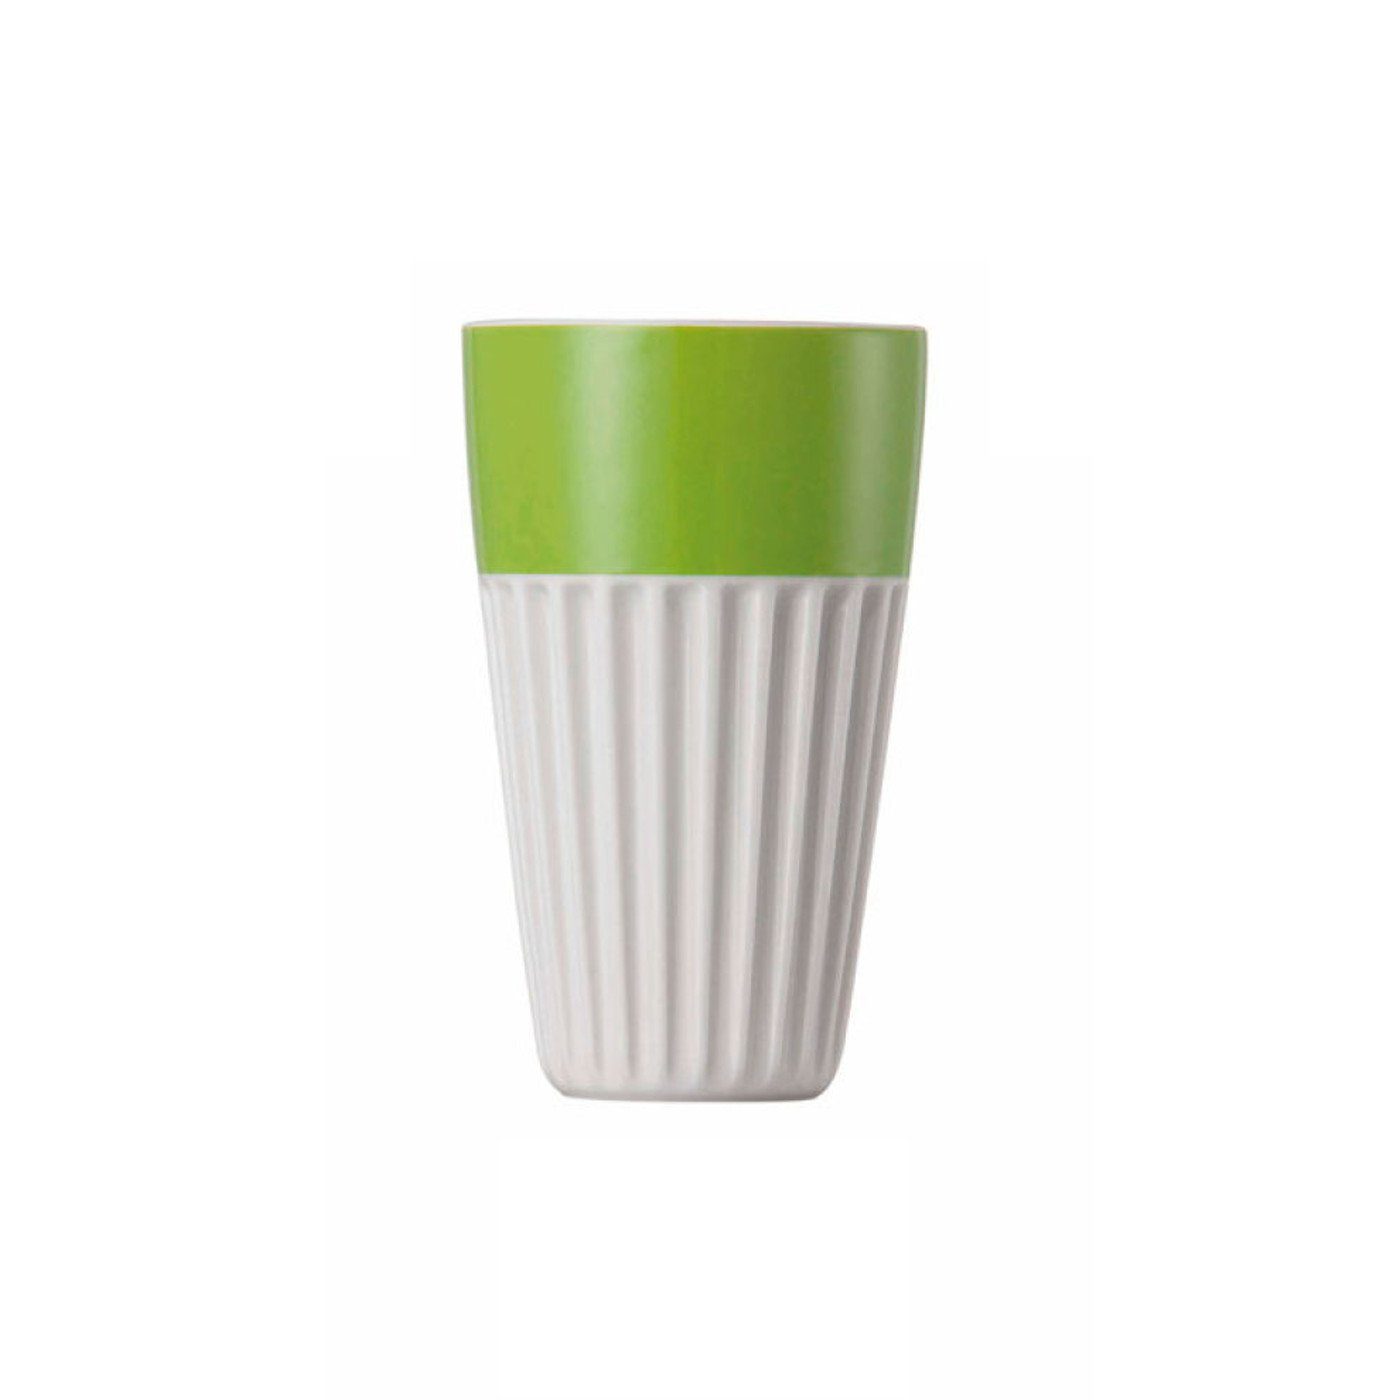 Thomas Porzellan Latte-Macchiato-Tasse »Sunny Day Apple Green cup°-Becher«,  Porzellan online kaufen | OTTO